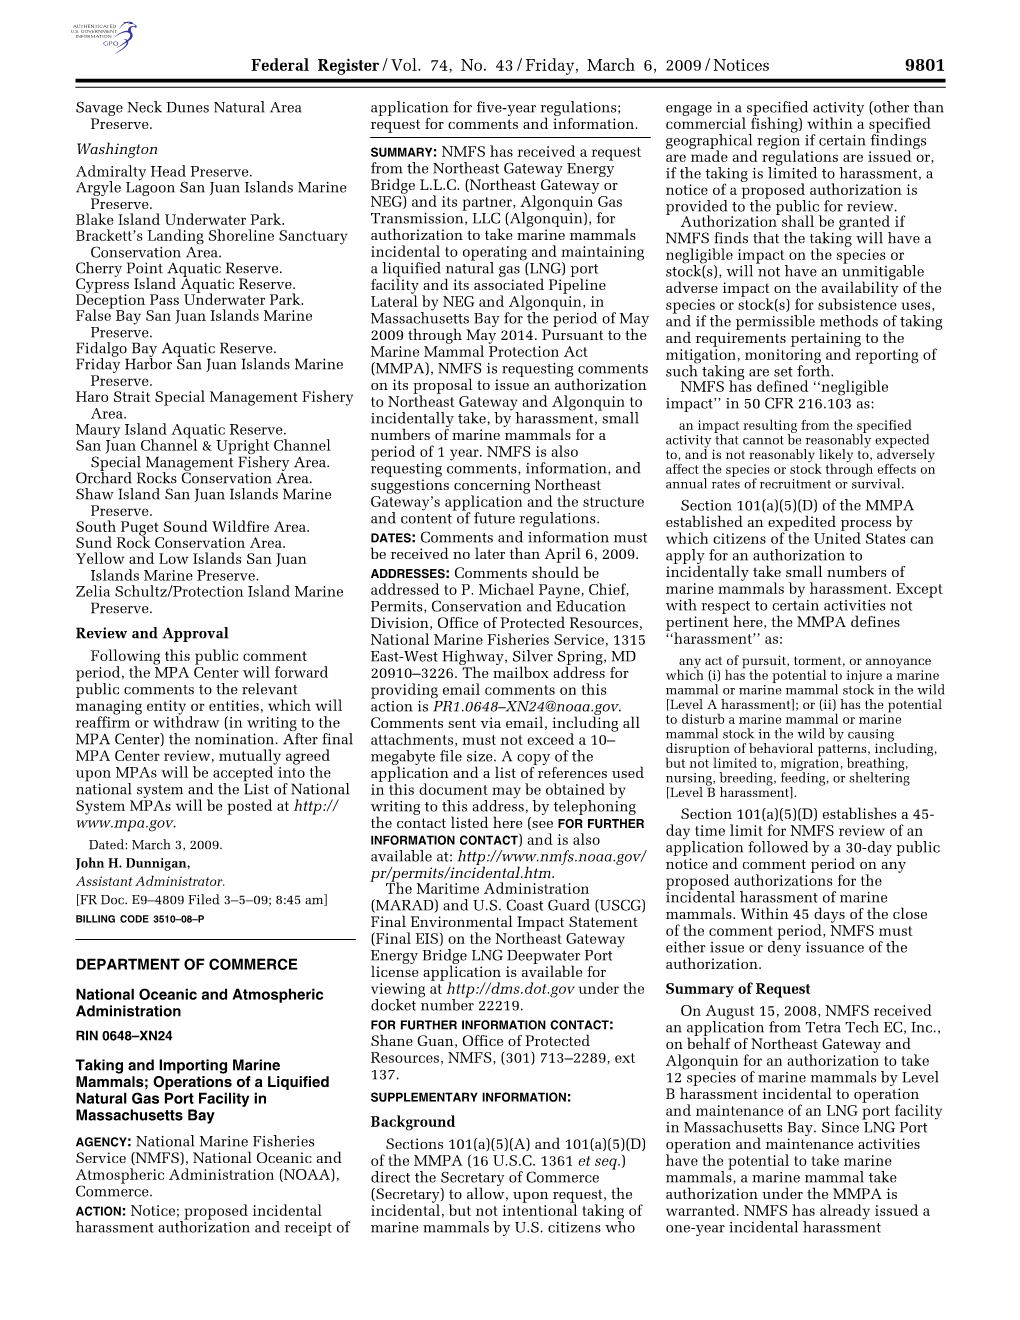 Federal Register/Vol. 74, No. 43/Friday, March 6, 2009/Notices